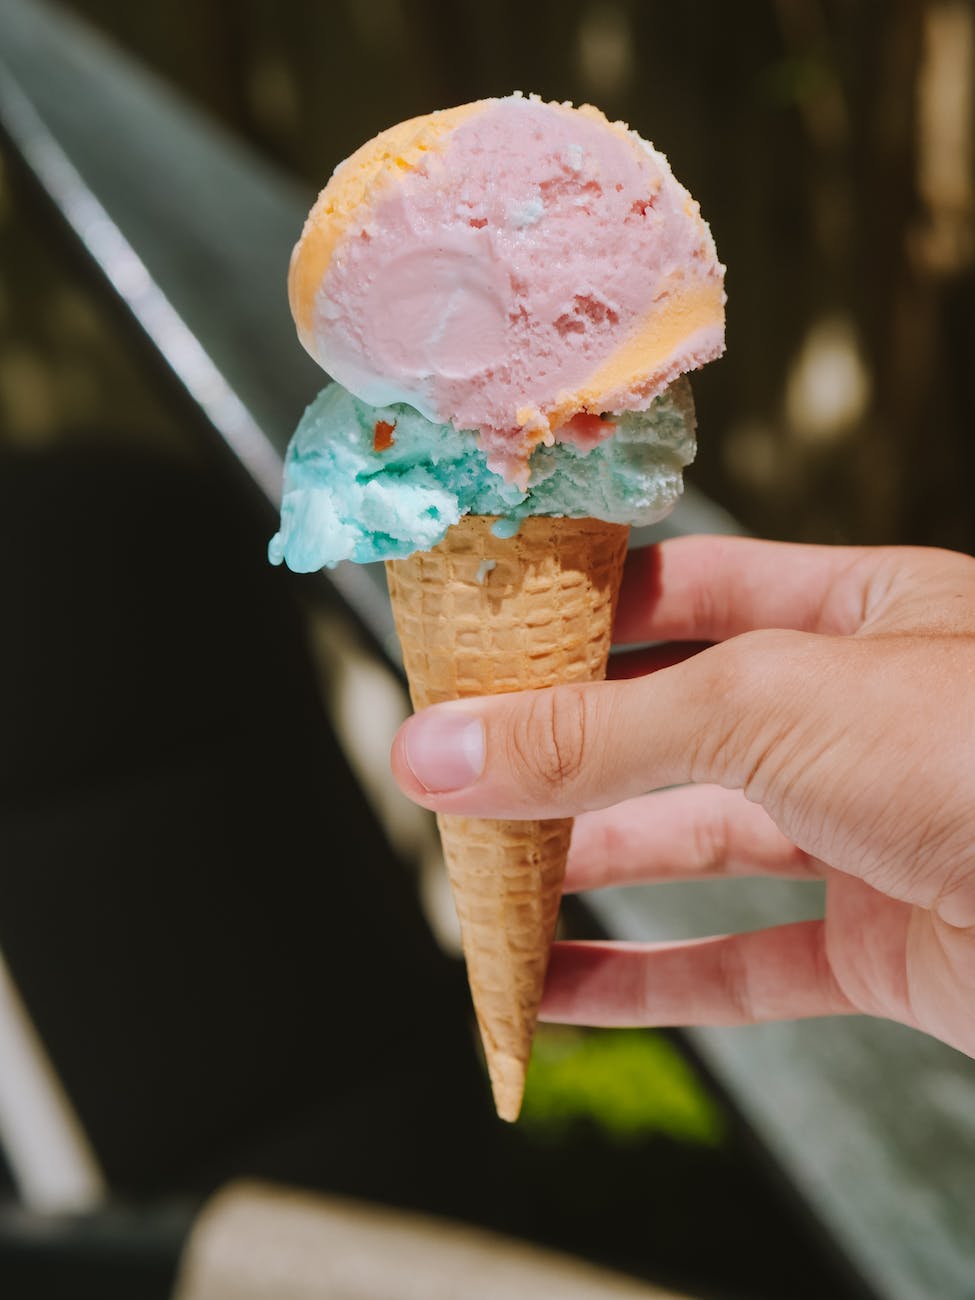 close up photo of an ice cream